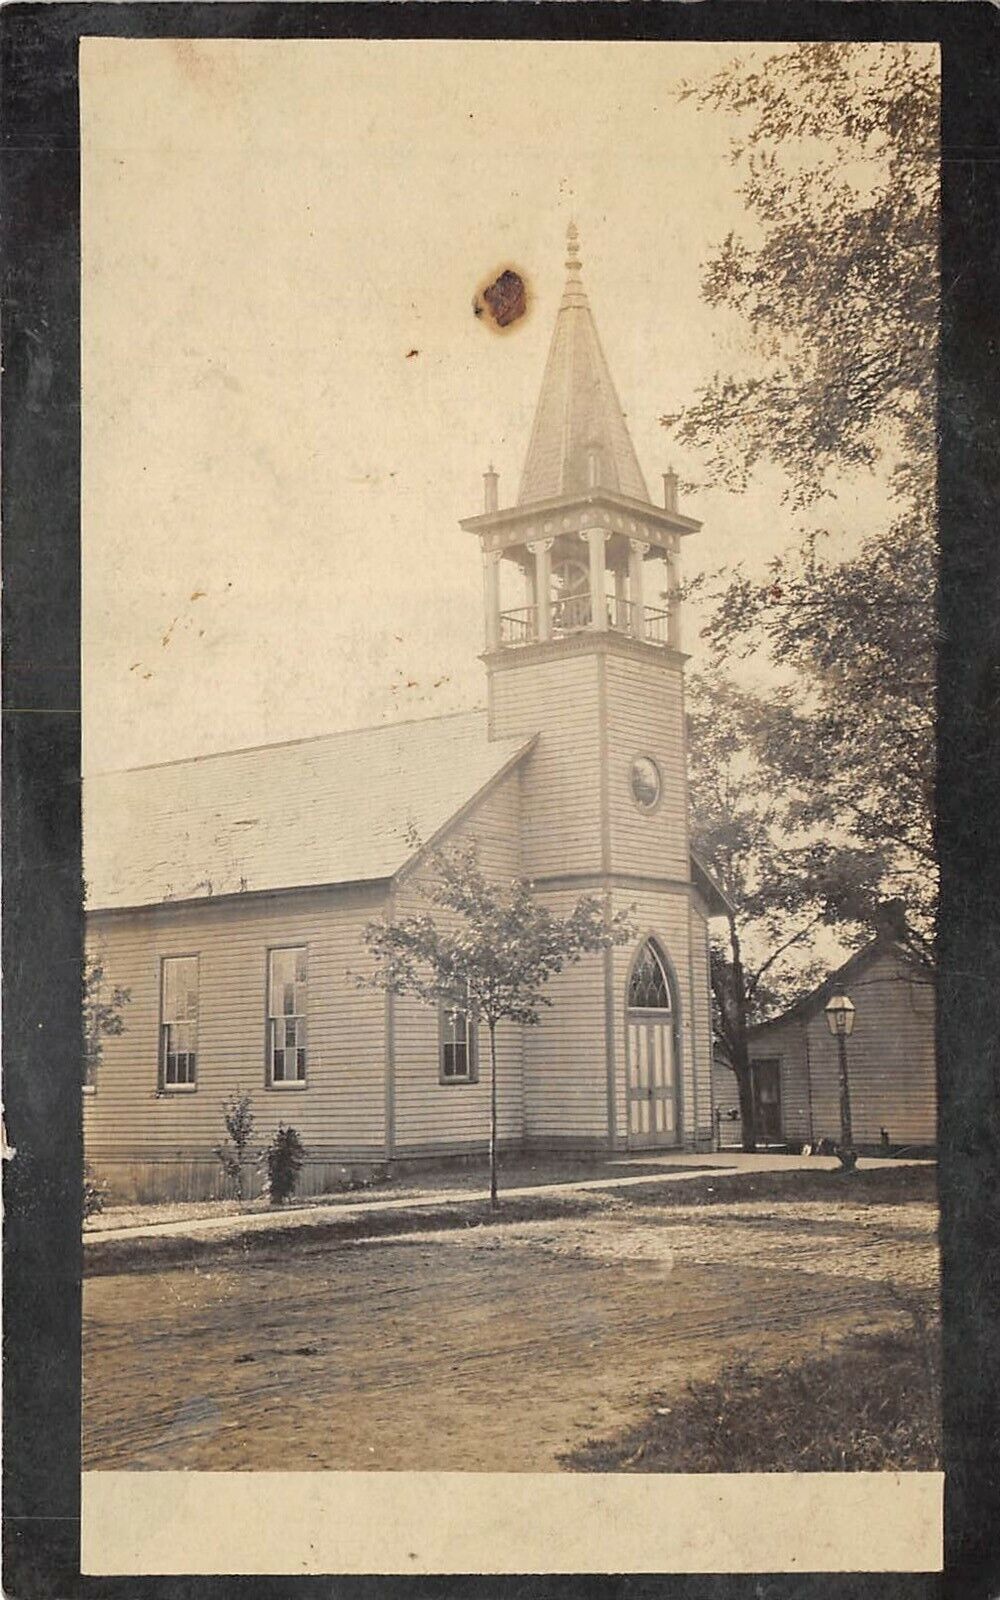 c1910 RPPC Real Photo Postcard Church Building Steeple